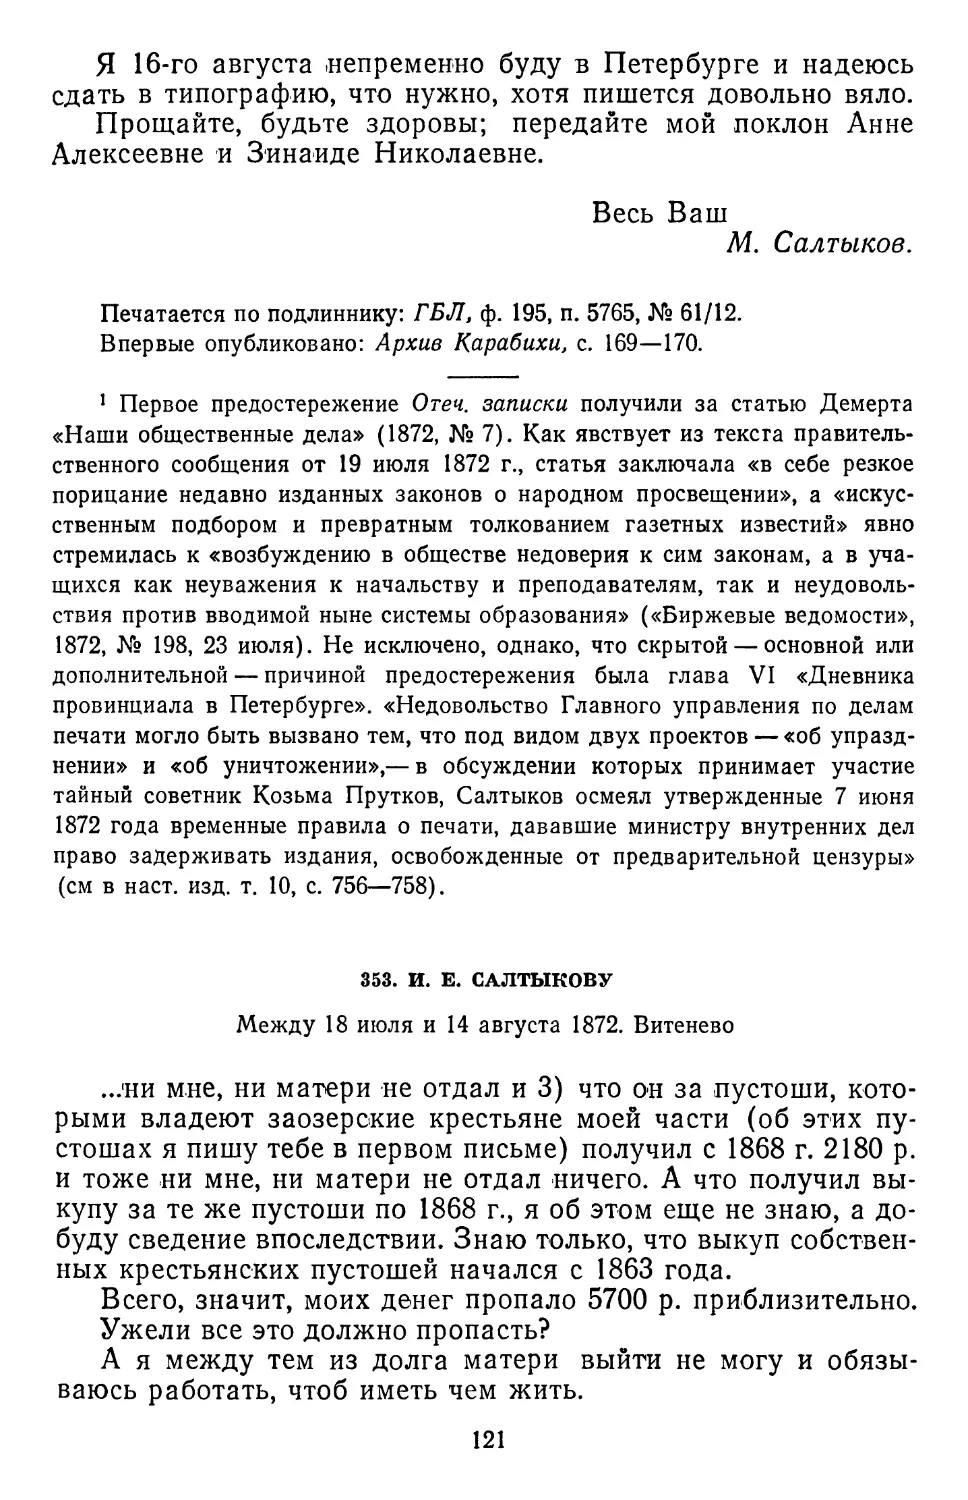 353.И. Е. Салтыкову. Между 18 июля и 14 августа 1872.Витенево